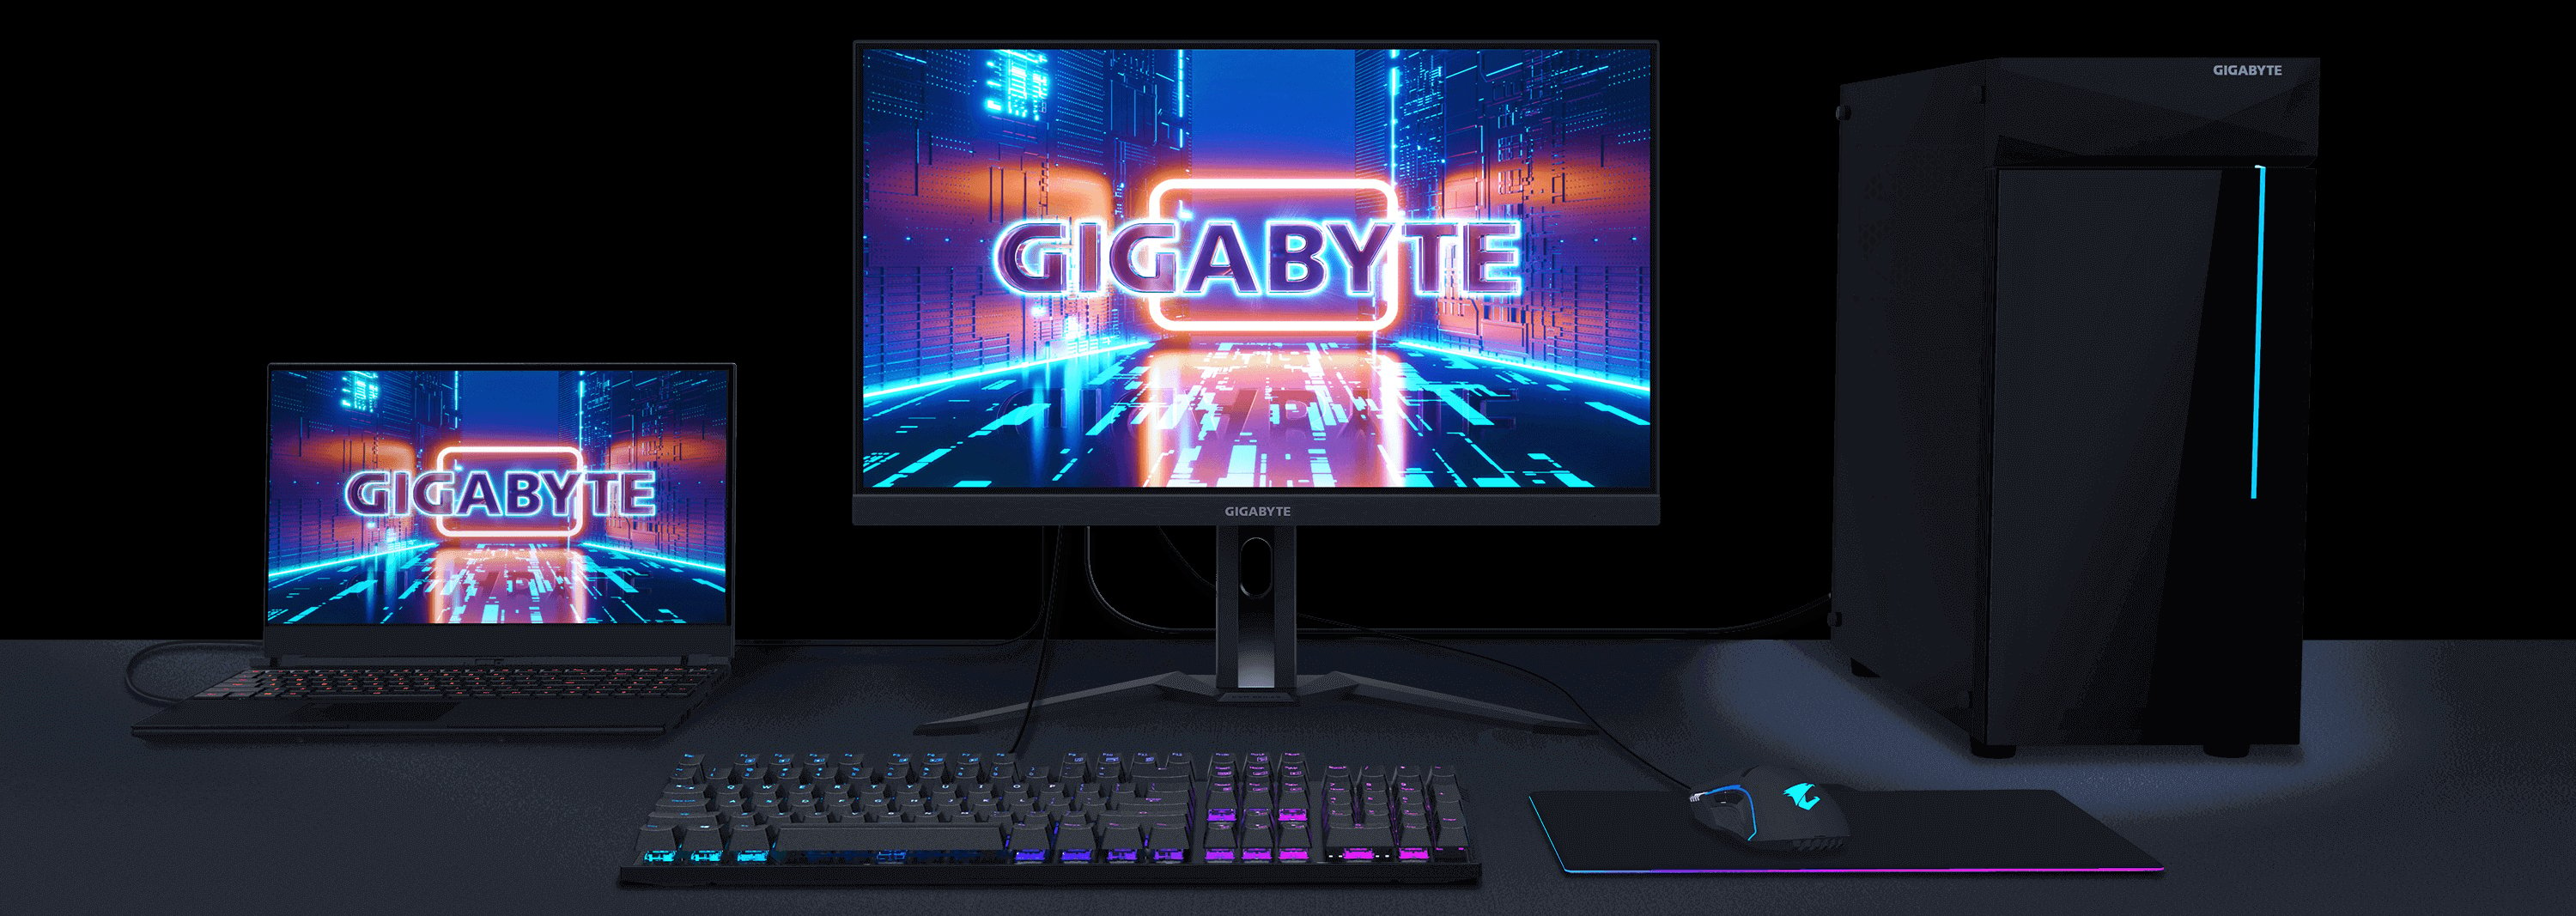 GIGABYTE M27Q-PRO 27 165Hz 1440P KVM Gaming Monitor, 2560 x 1440 SS IPS  Display, 1ms (GTG) Response Time, 98% DCI-P3, 1x Display Port 1.4, 2x HDMI  2.0, 2x USB 3.0 Downstream, 1x